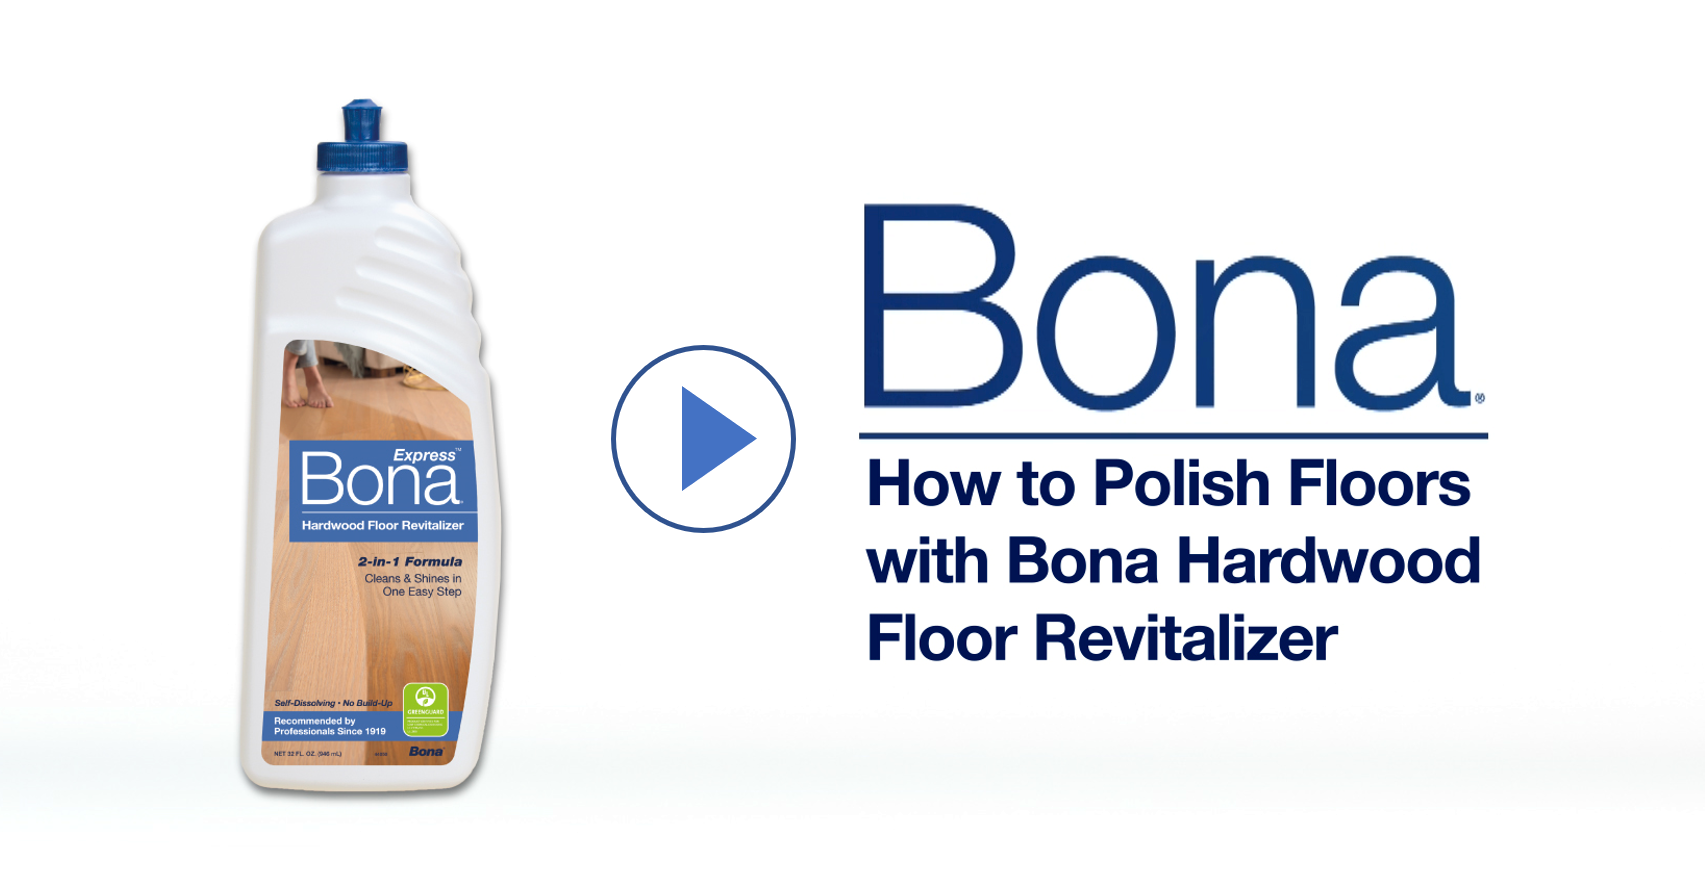 Bona Express Hardwood Floor, Bonafide Hardwood Floor Cleaner